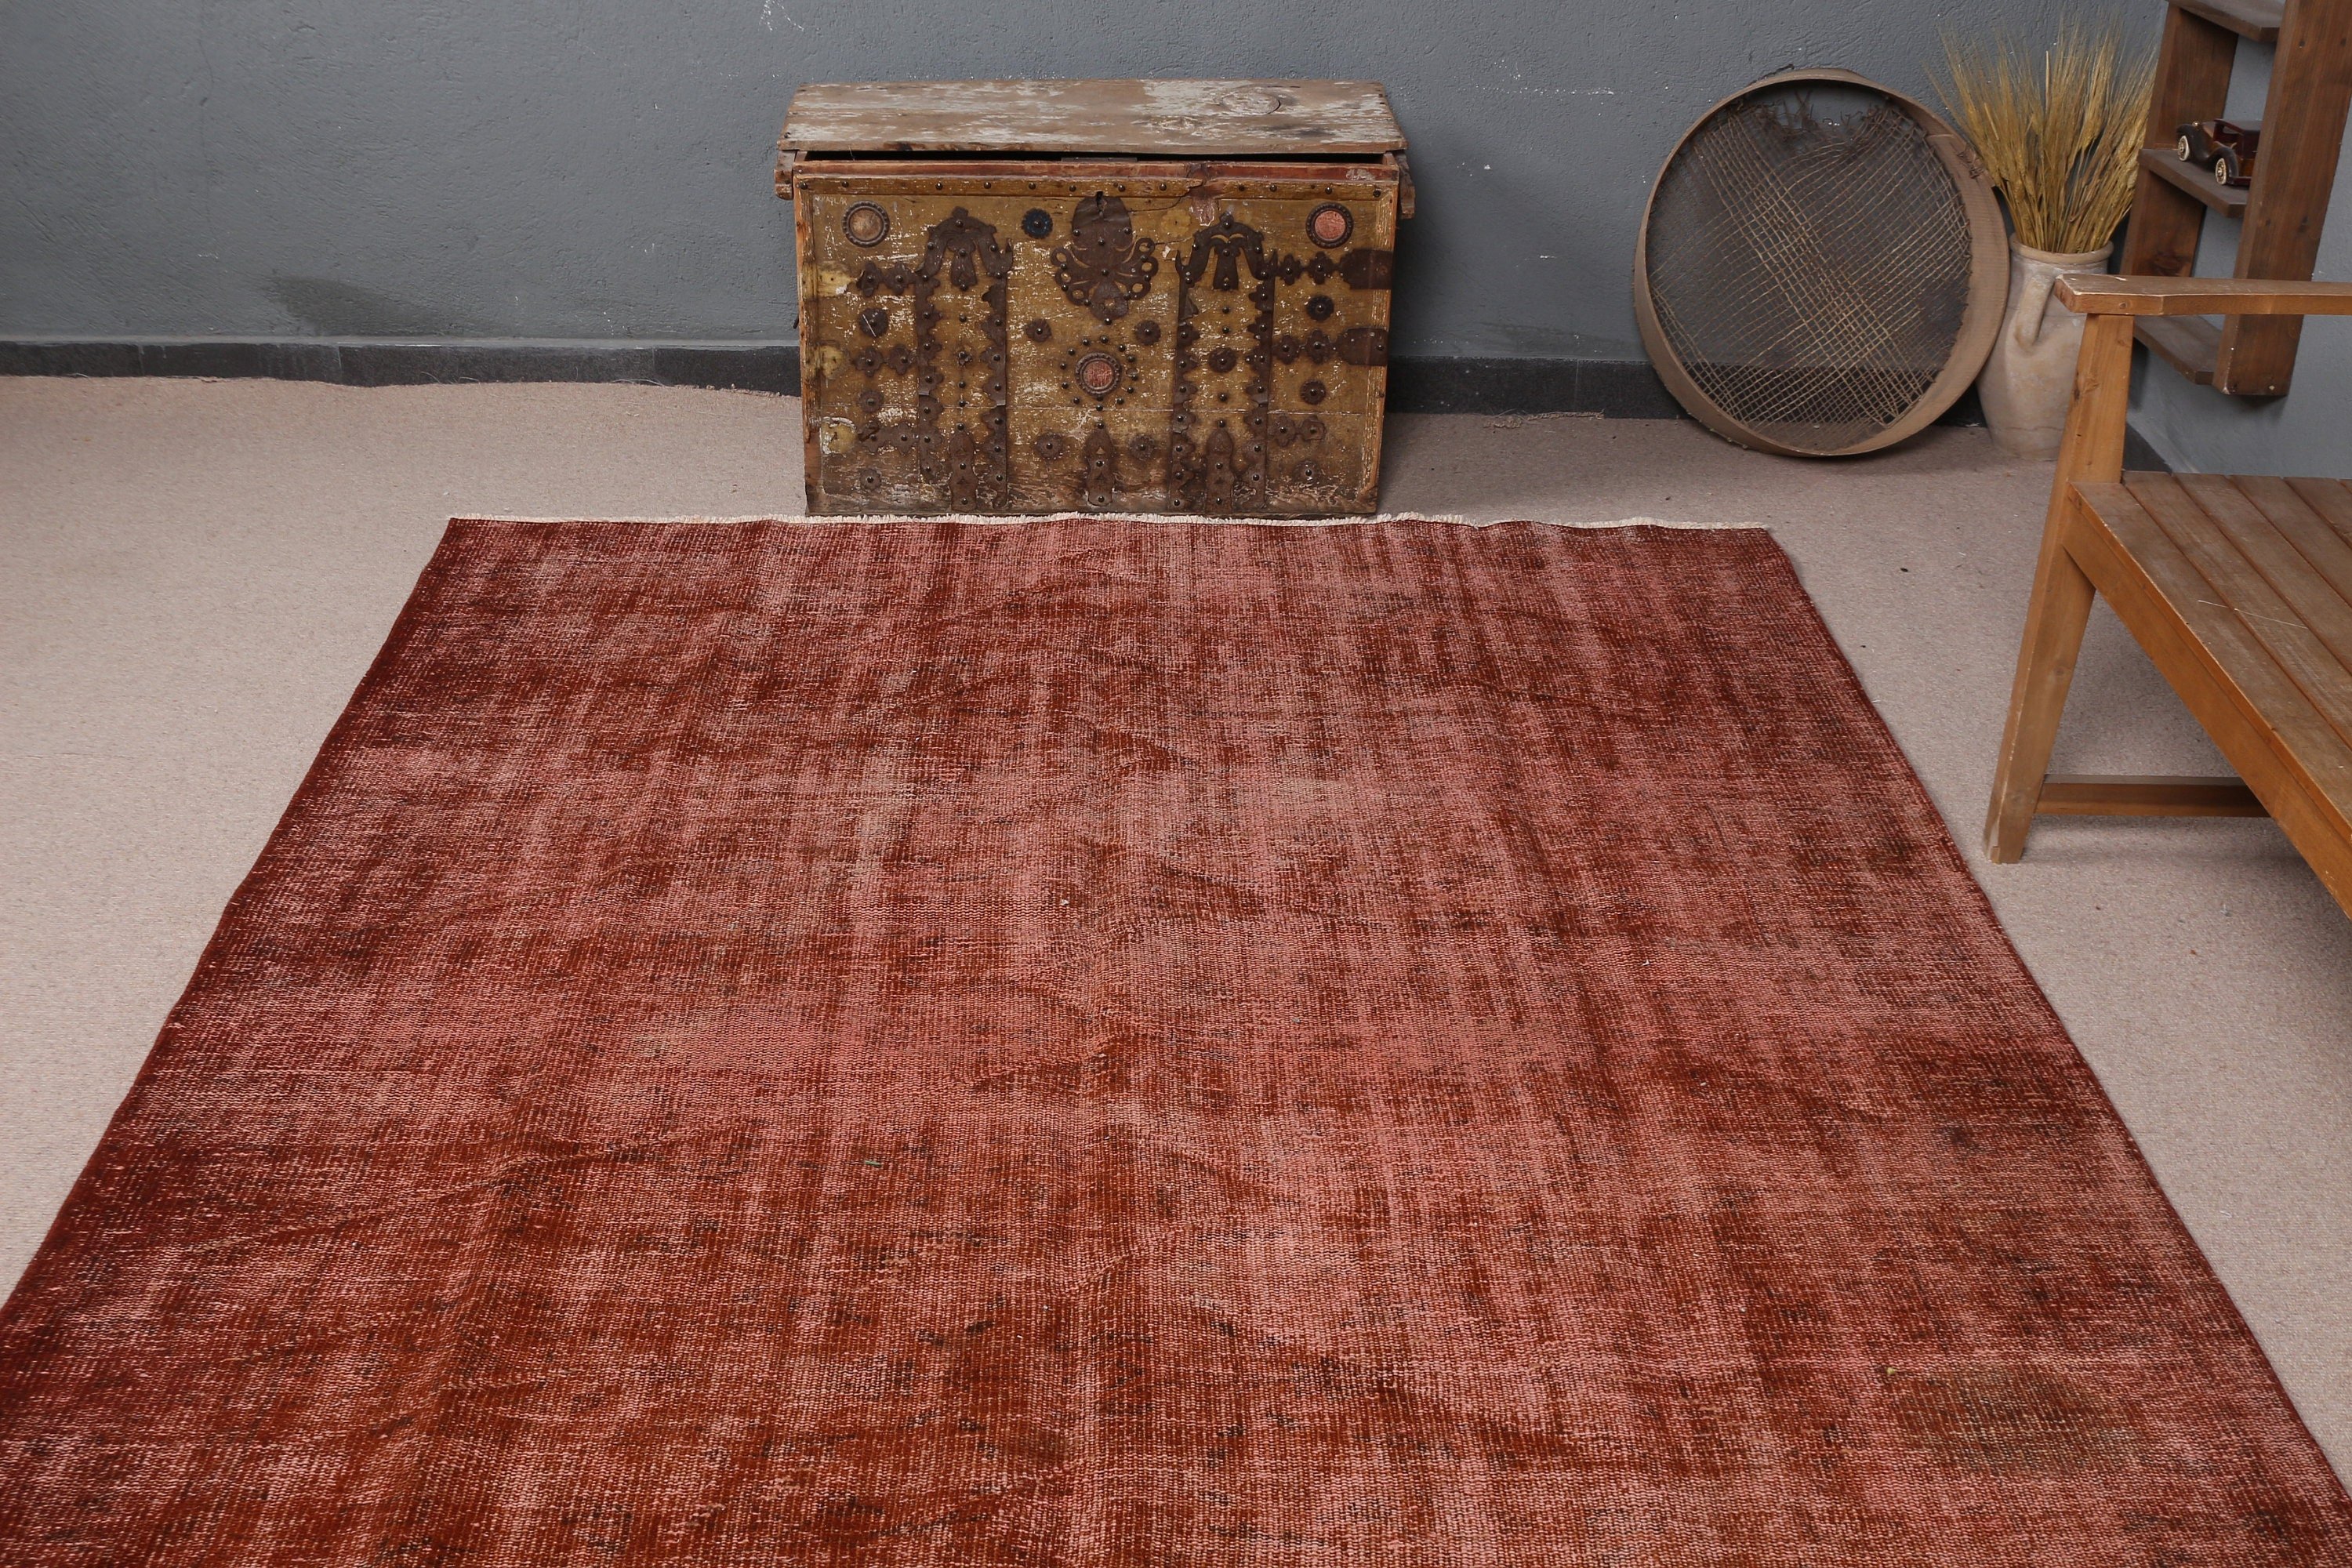 Salon Rug, Vintage Rugs, Moroccan Rug, Floor Rug, Abstract Rug, Turkish Rug, Brown  6.2x9.3 ft Large Rug, Dining Room Rugs